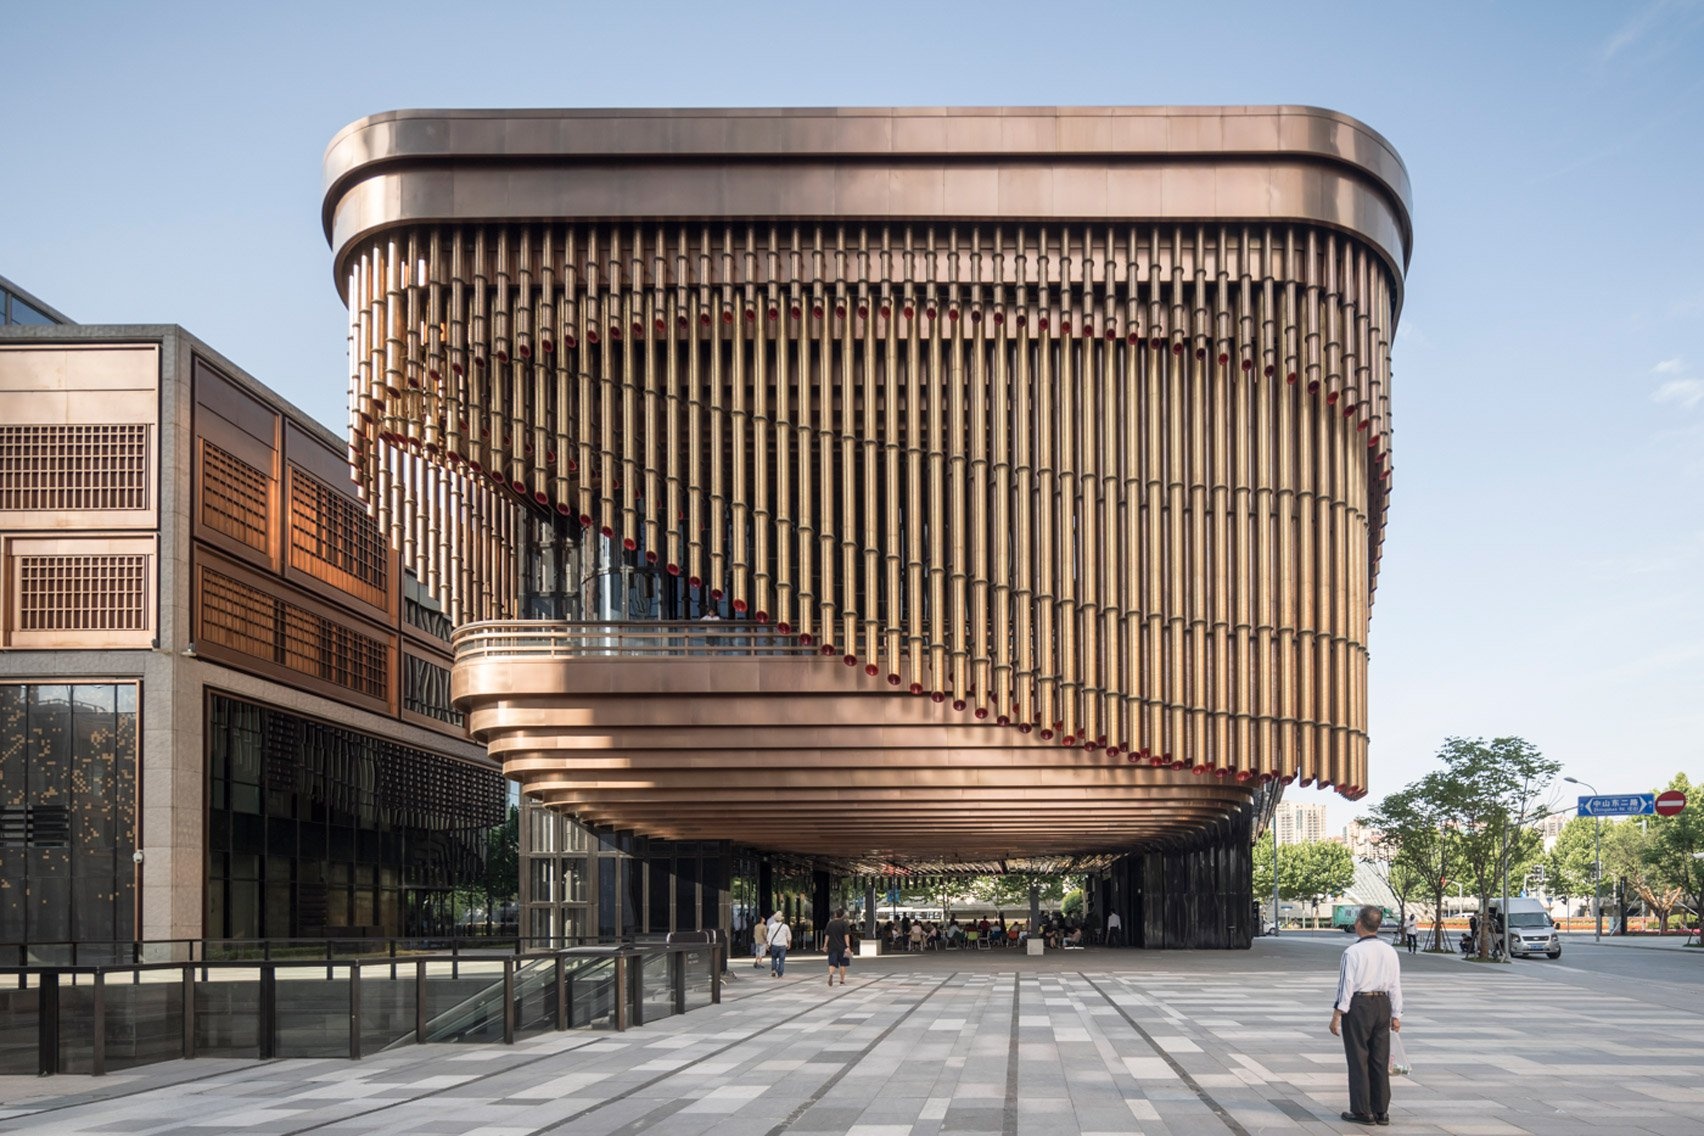 Architecture culture. The Bund Finance Center от Нормана Фостера и Heatherwick Studio.